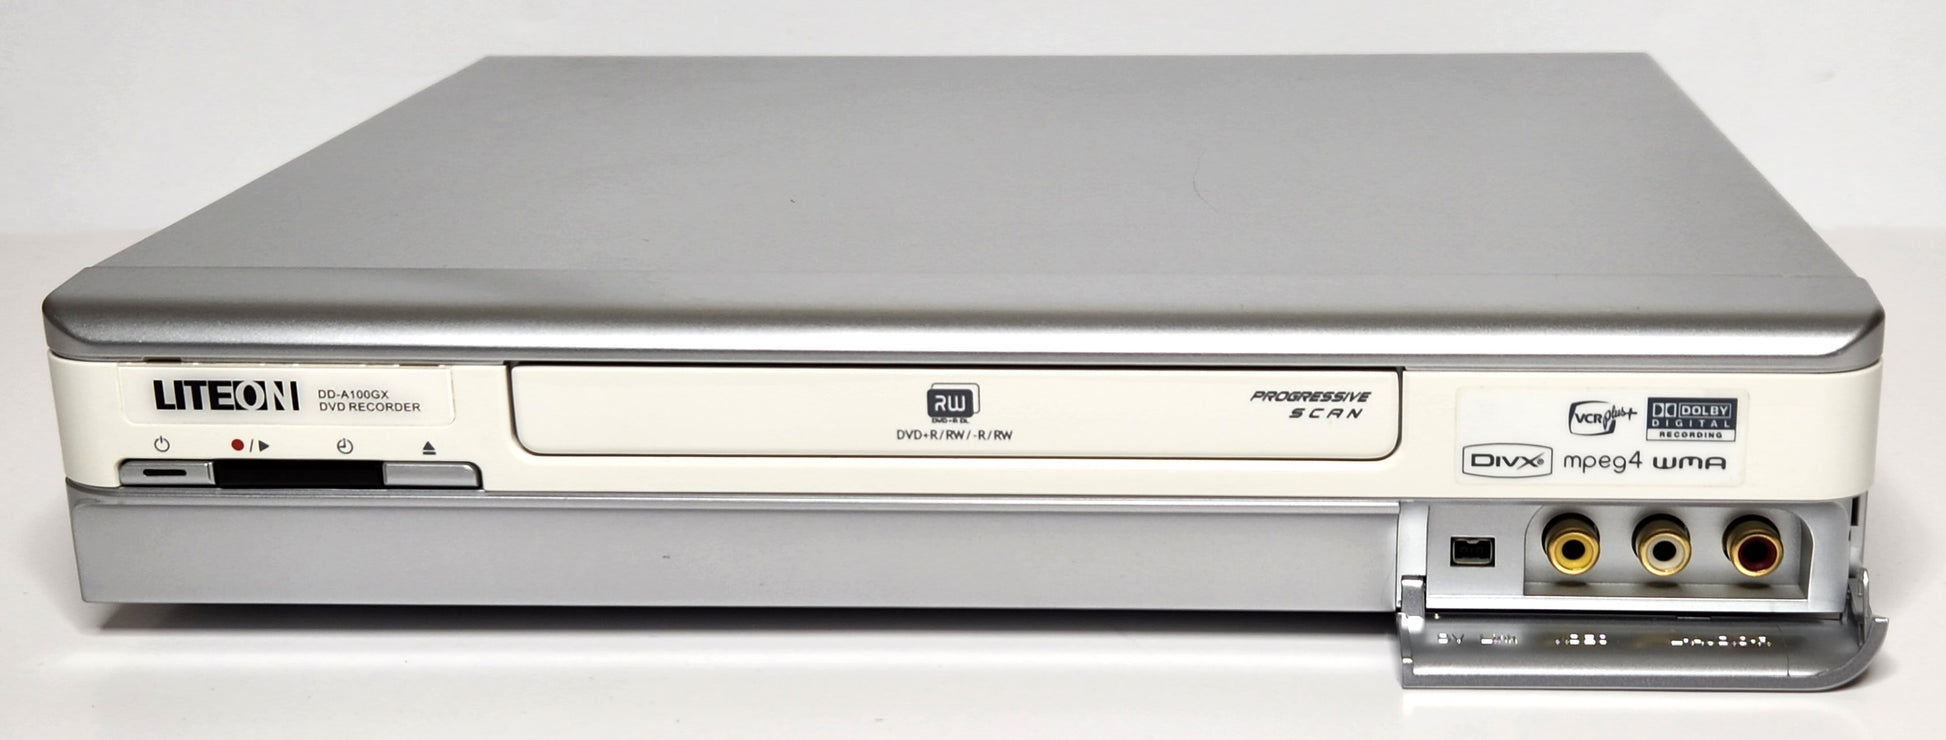 Liteon DD-A100GX DVD Recorder - Front